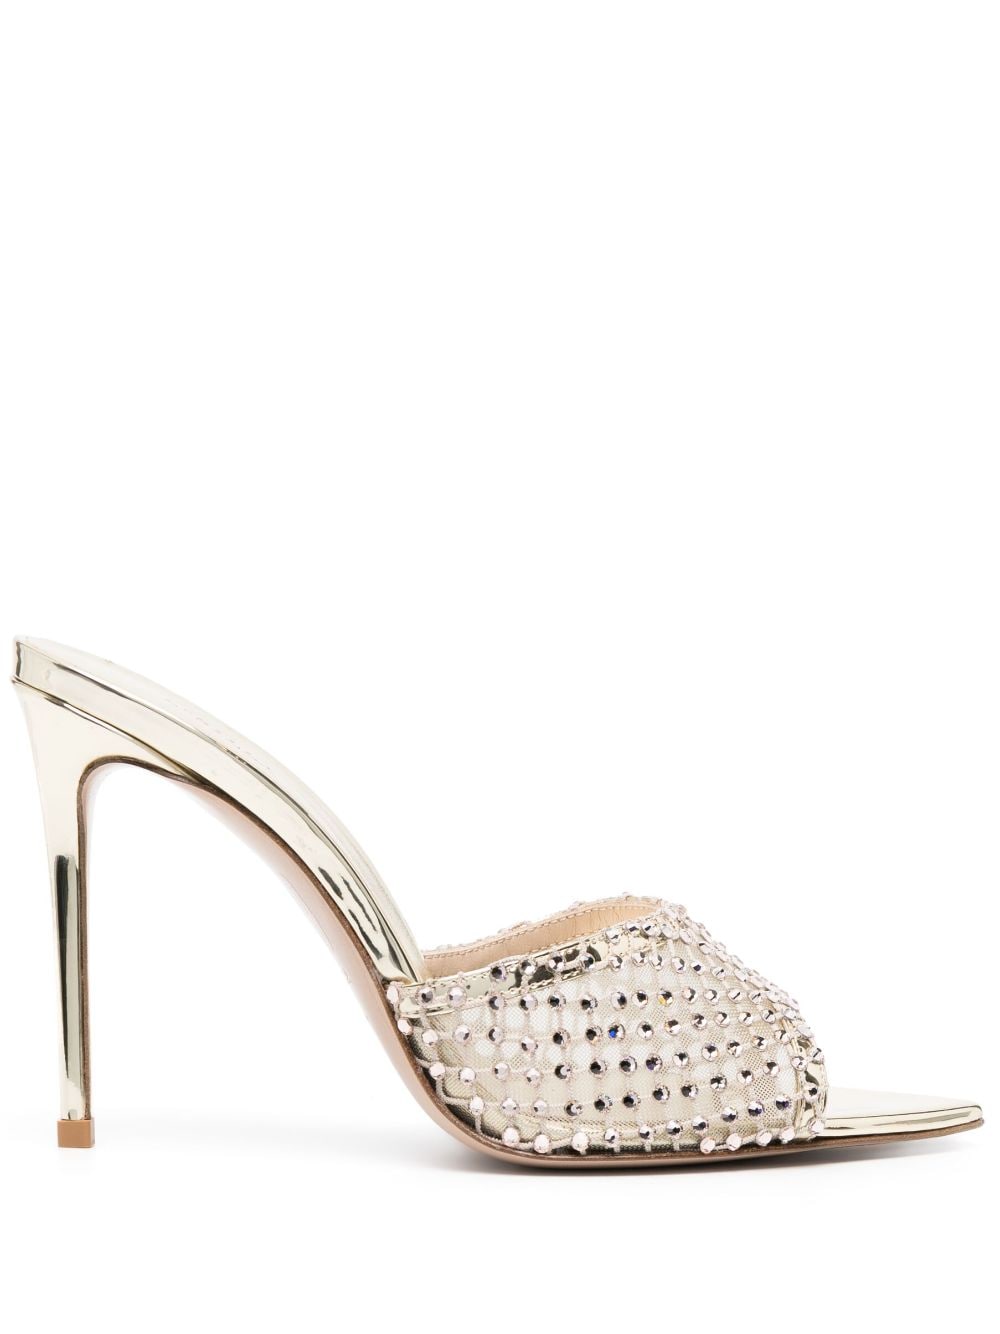 Le Silla Gilda 110mm crystal sandals - Gold von Le Silla